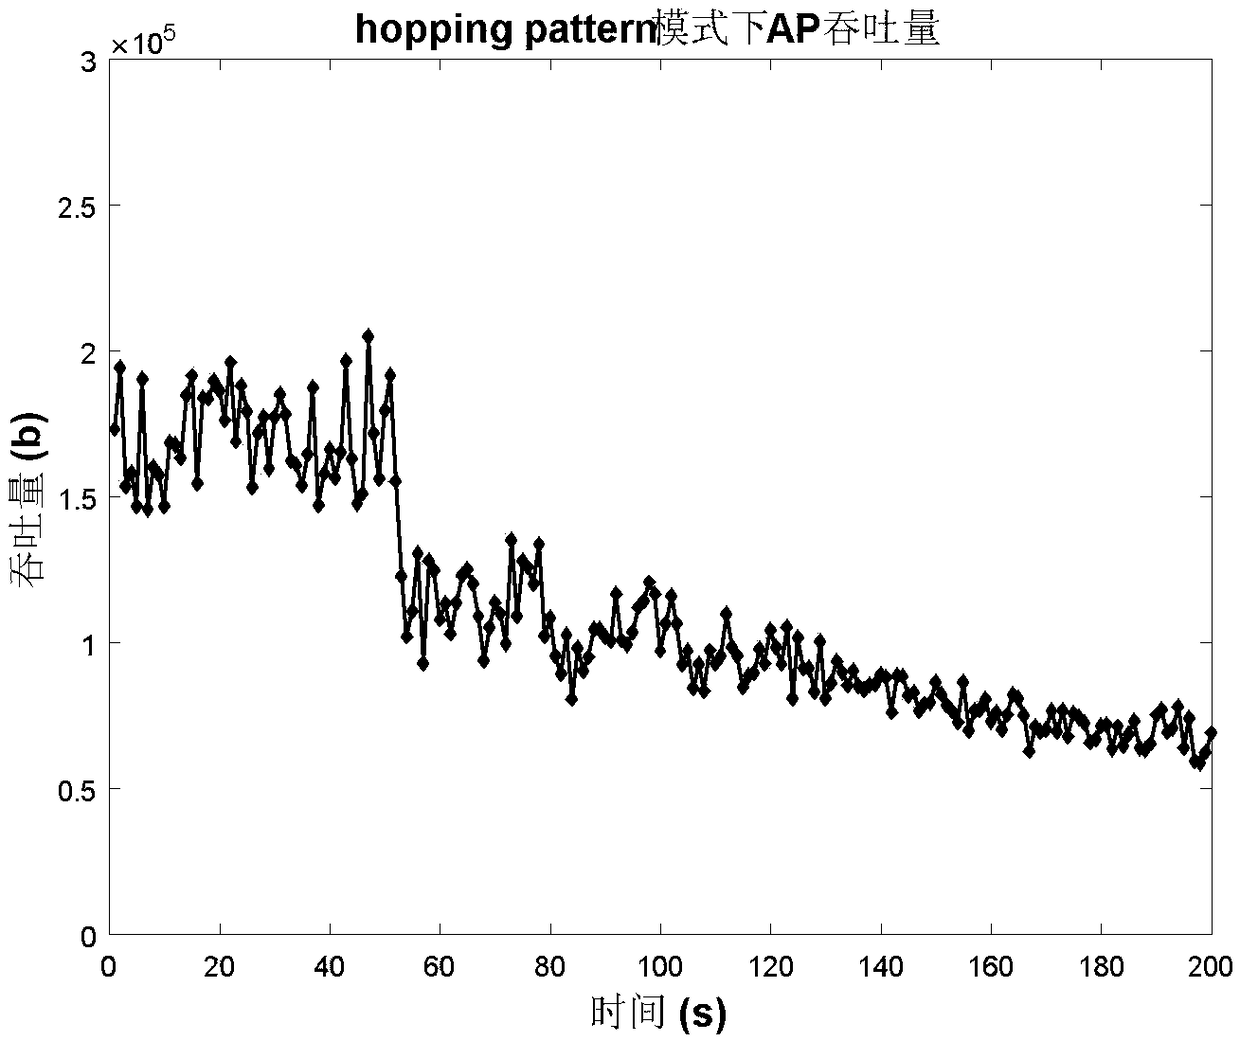 Multi-user MAC channel access method based on hopping pattern